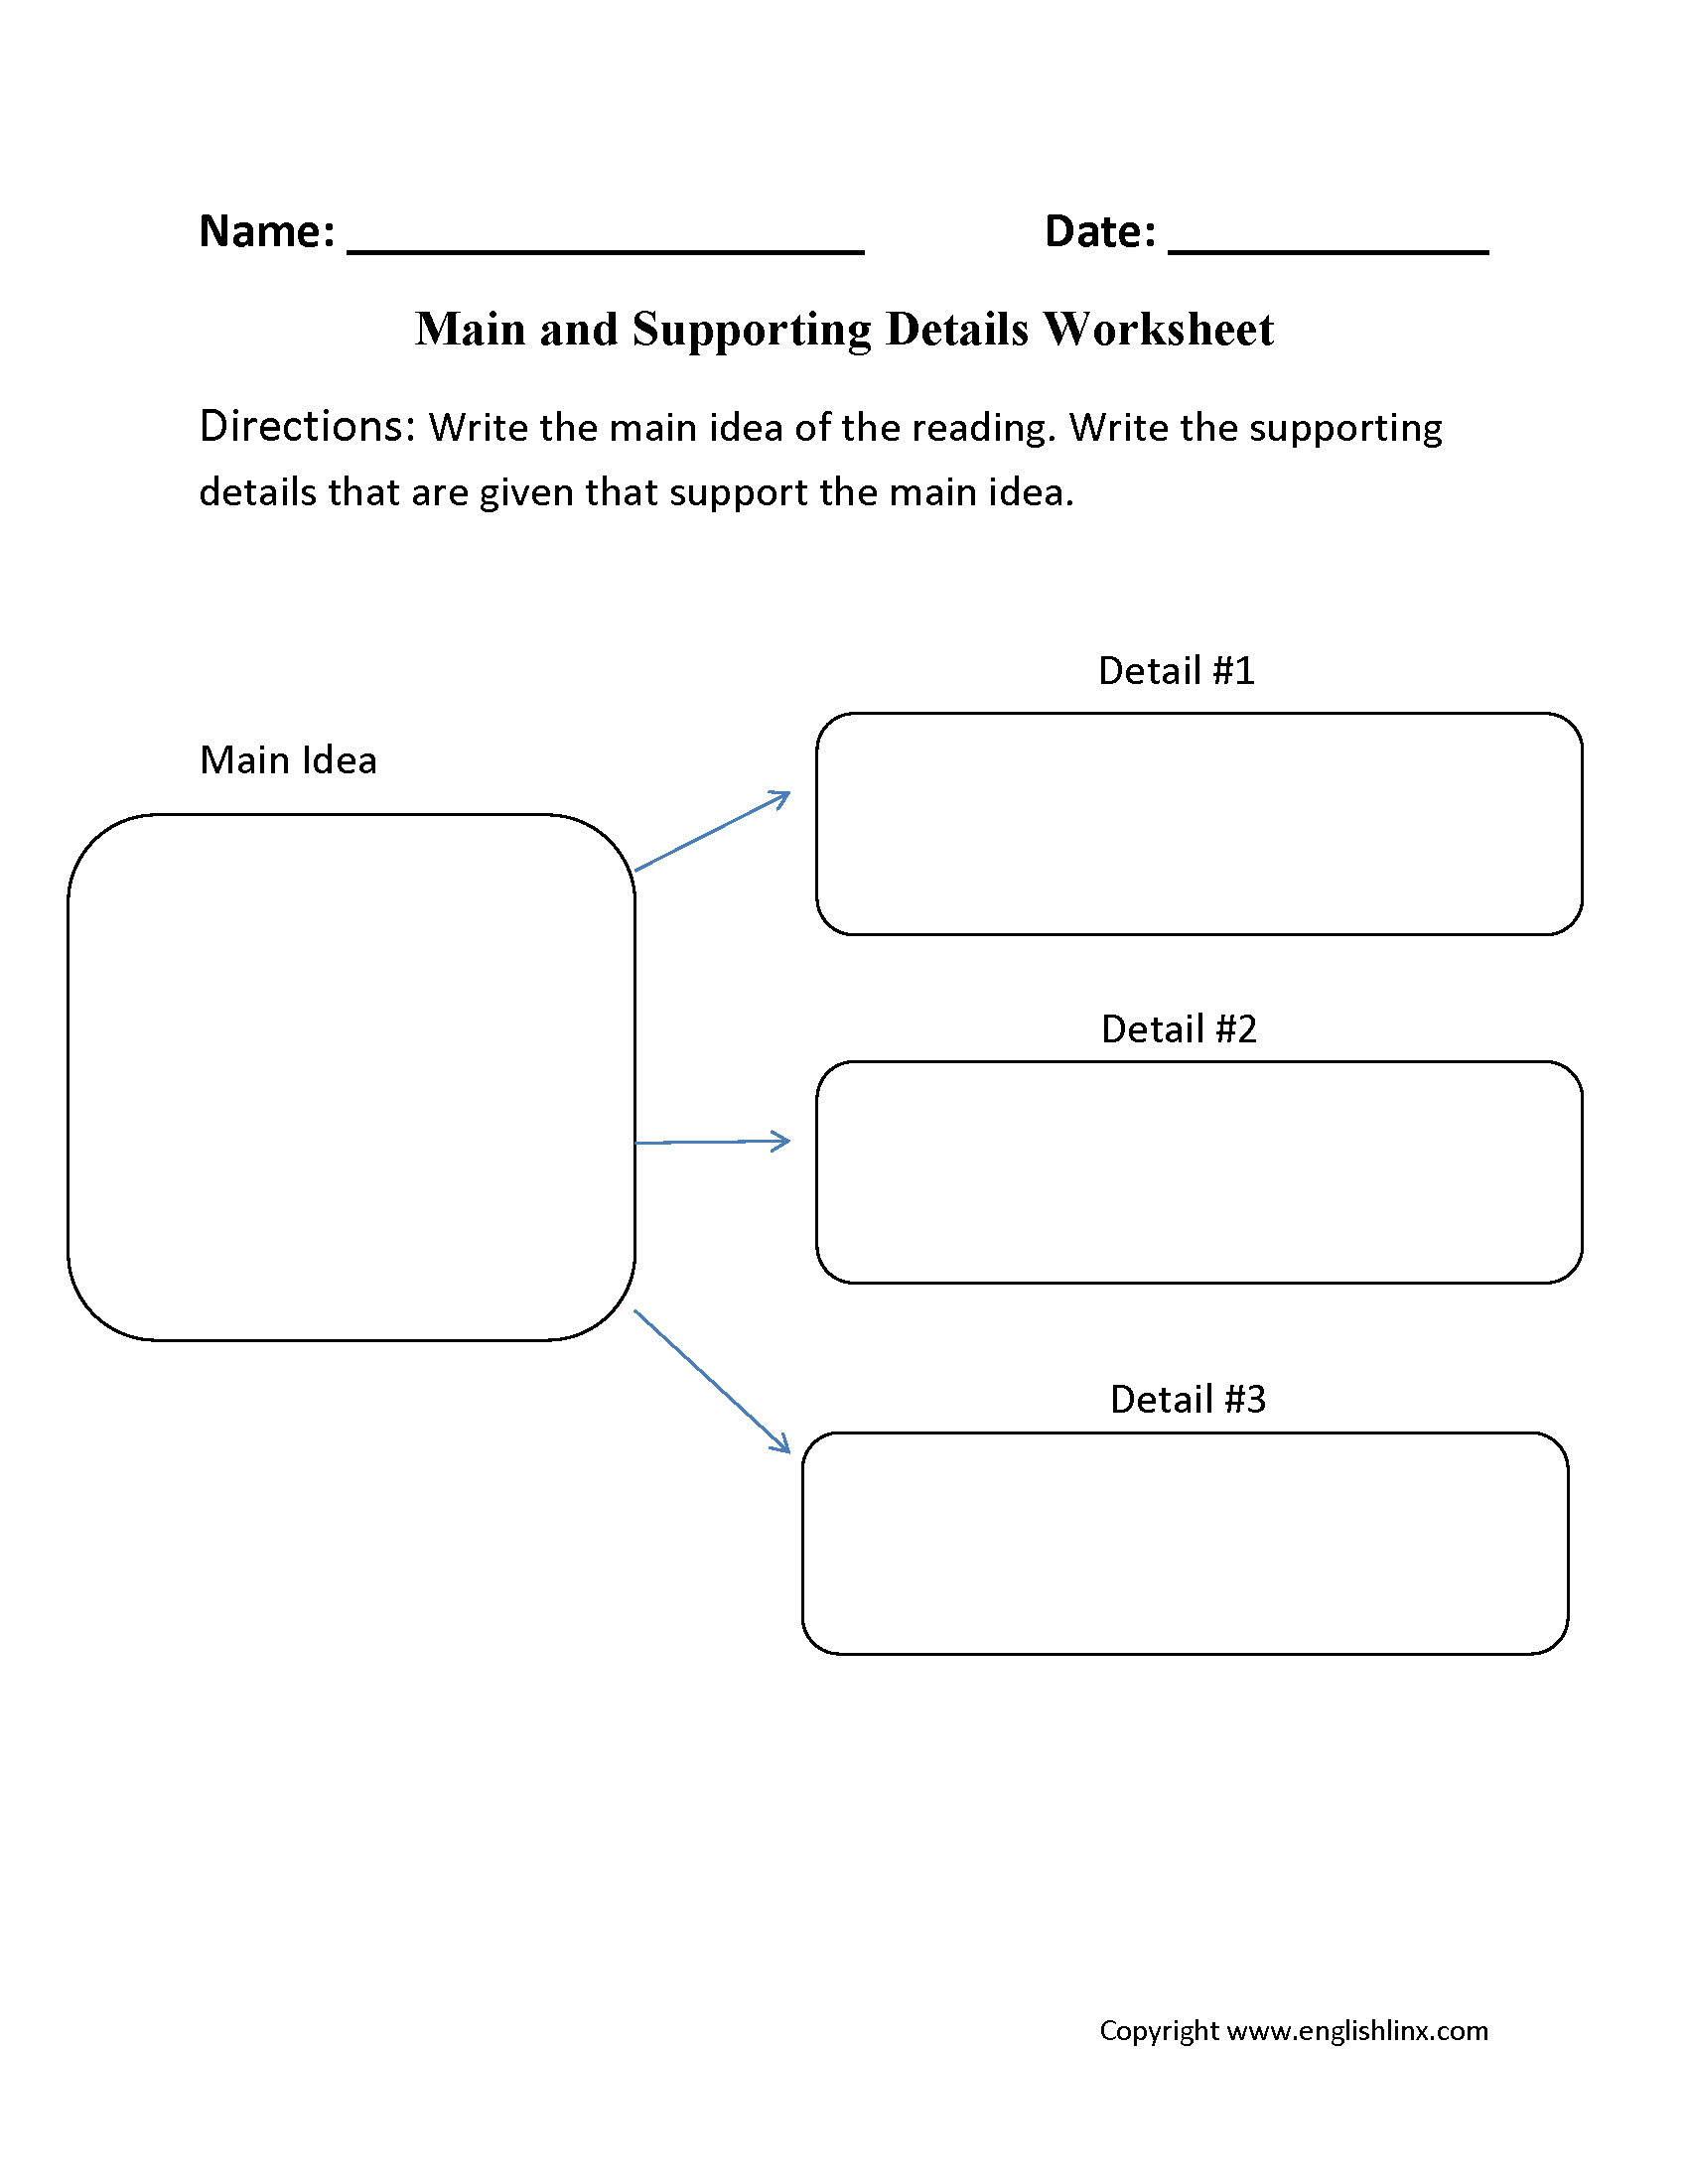 Main Idea Suporting Details Worksheets